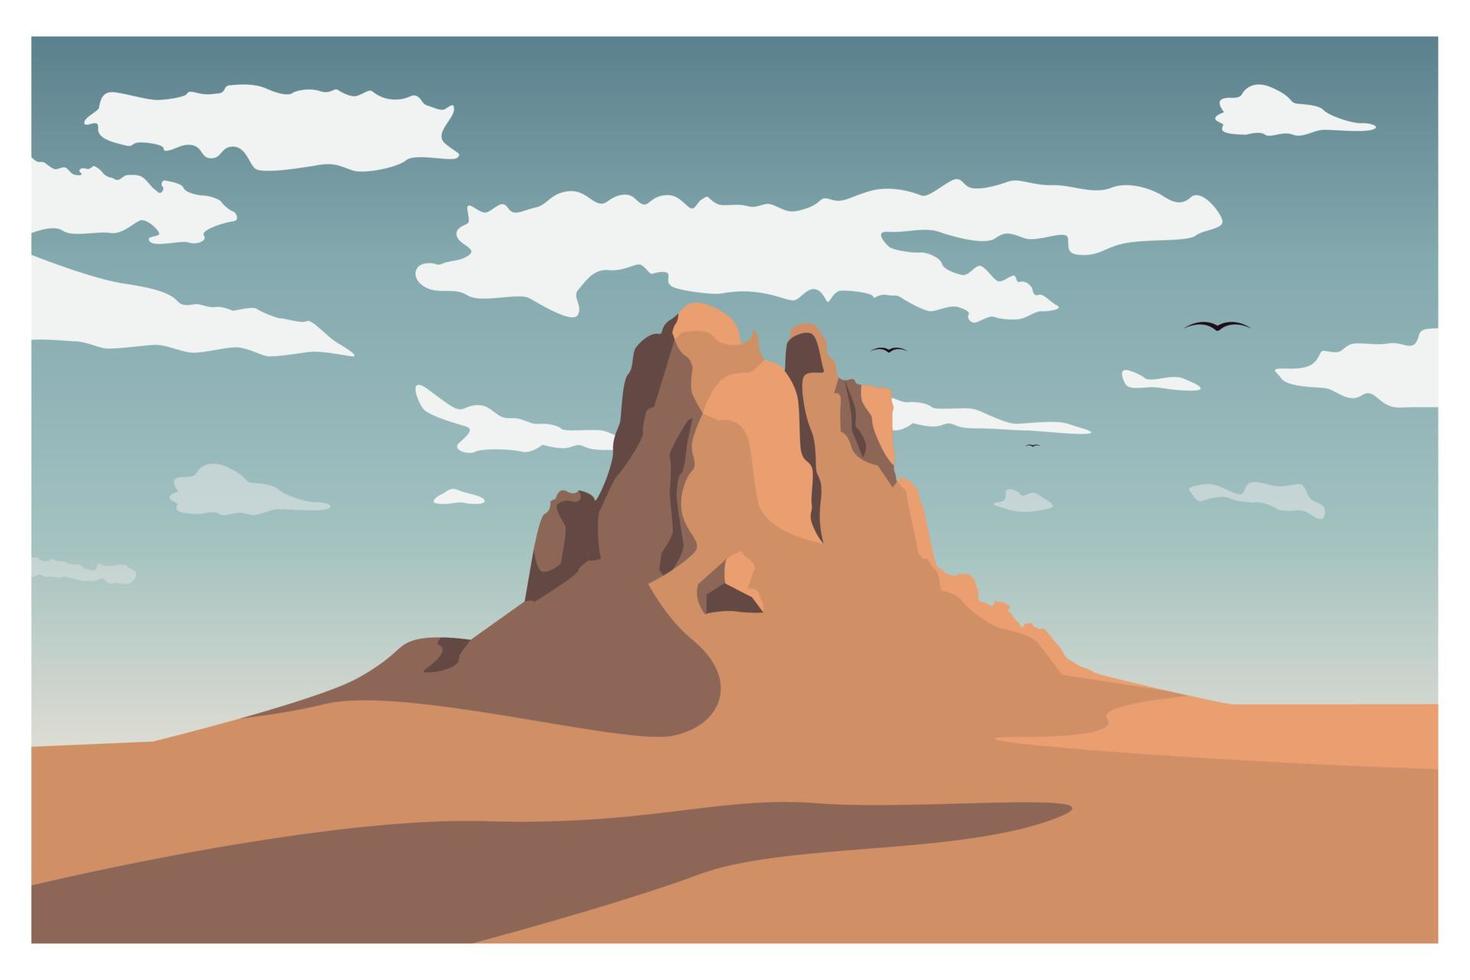 Rock formation in the desert. Vector illustration.